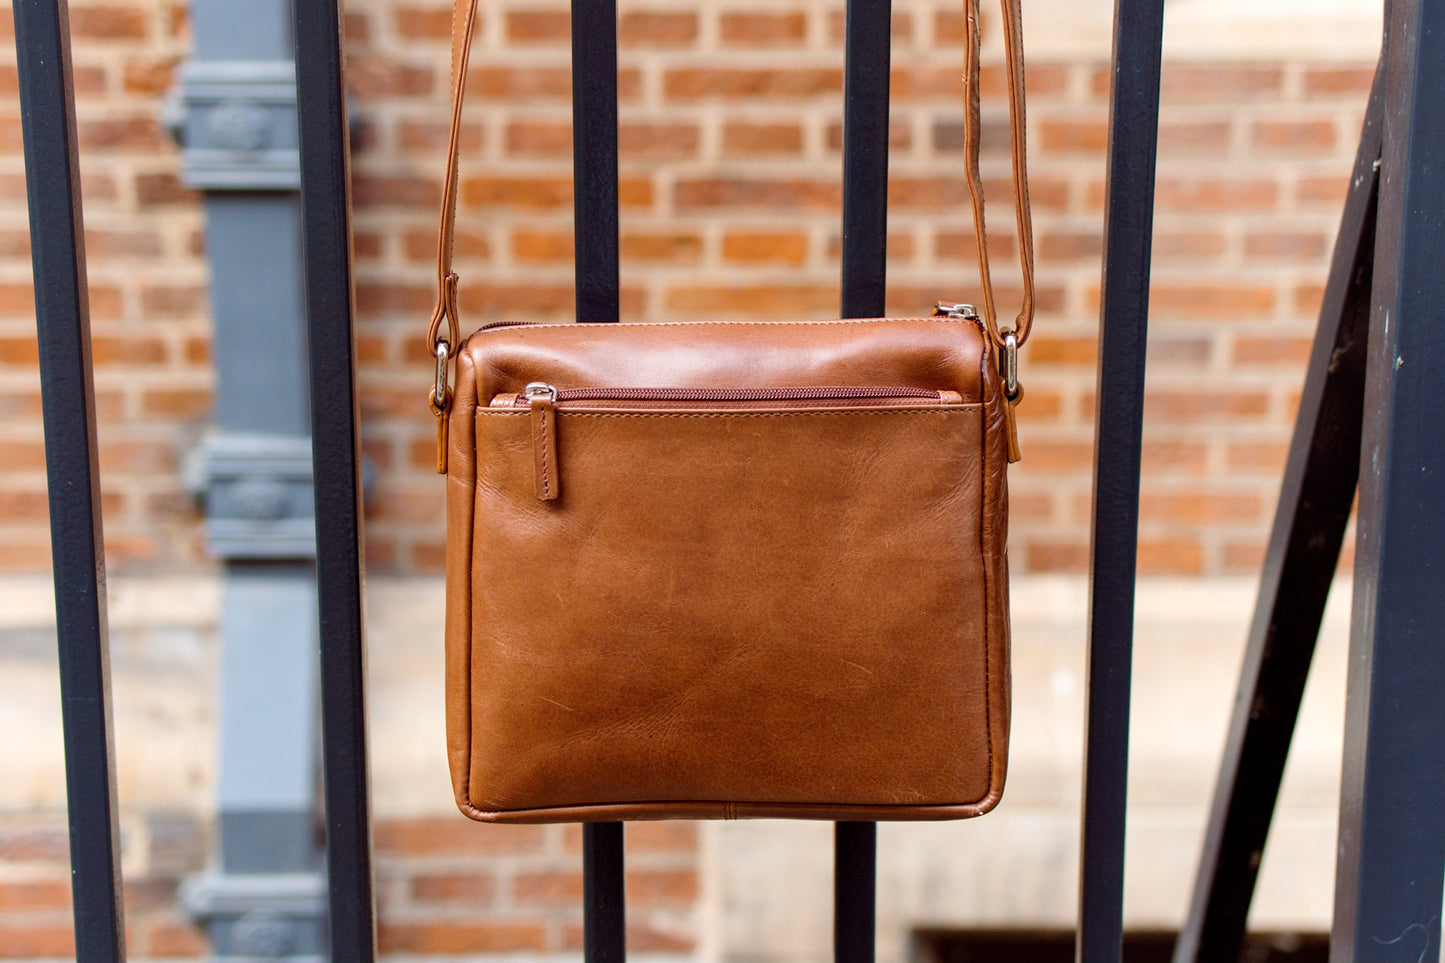 GT-H89: G&T Full-grain Leather Trendy Ladies' Crossbody Bag with Long Adjustable Shoulder Strap